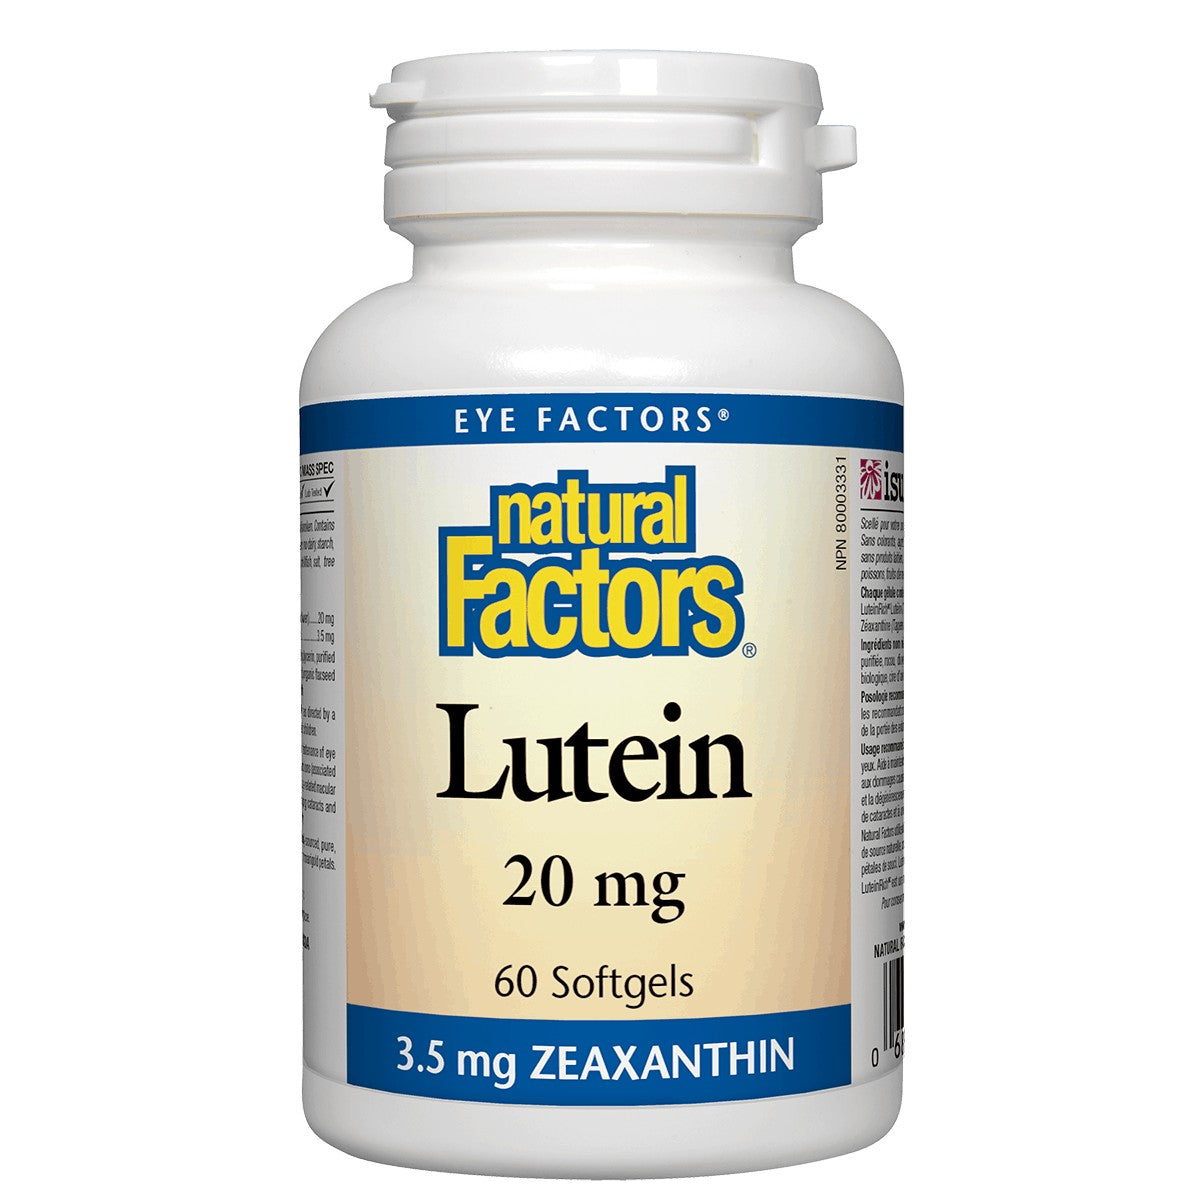 Natural Factors Lutein 20 Mg, 60 Softgels